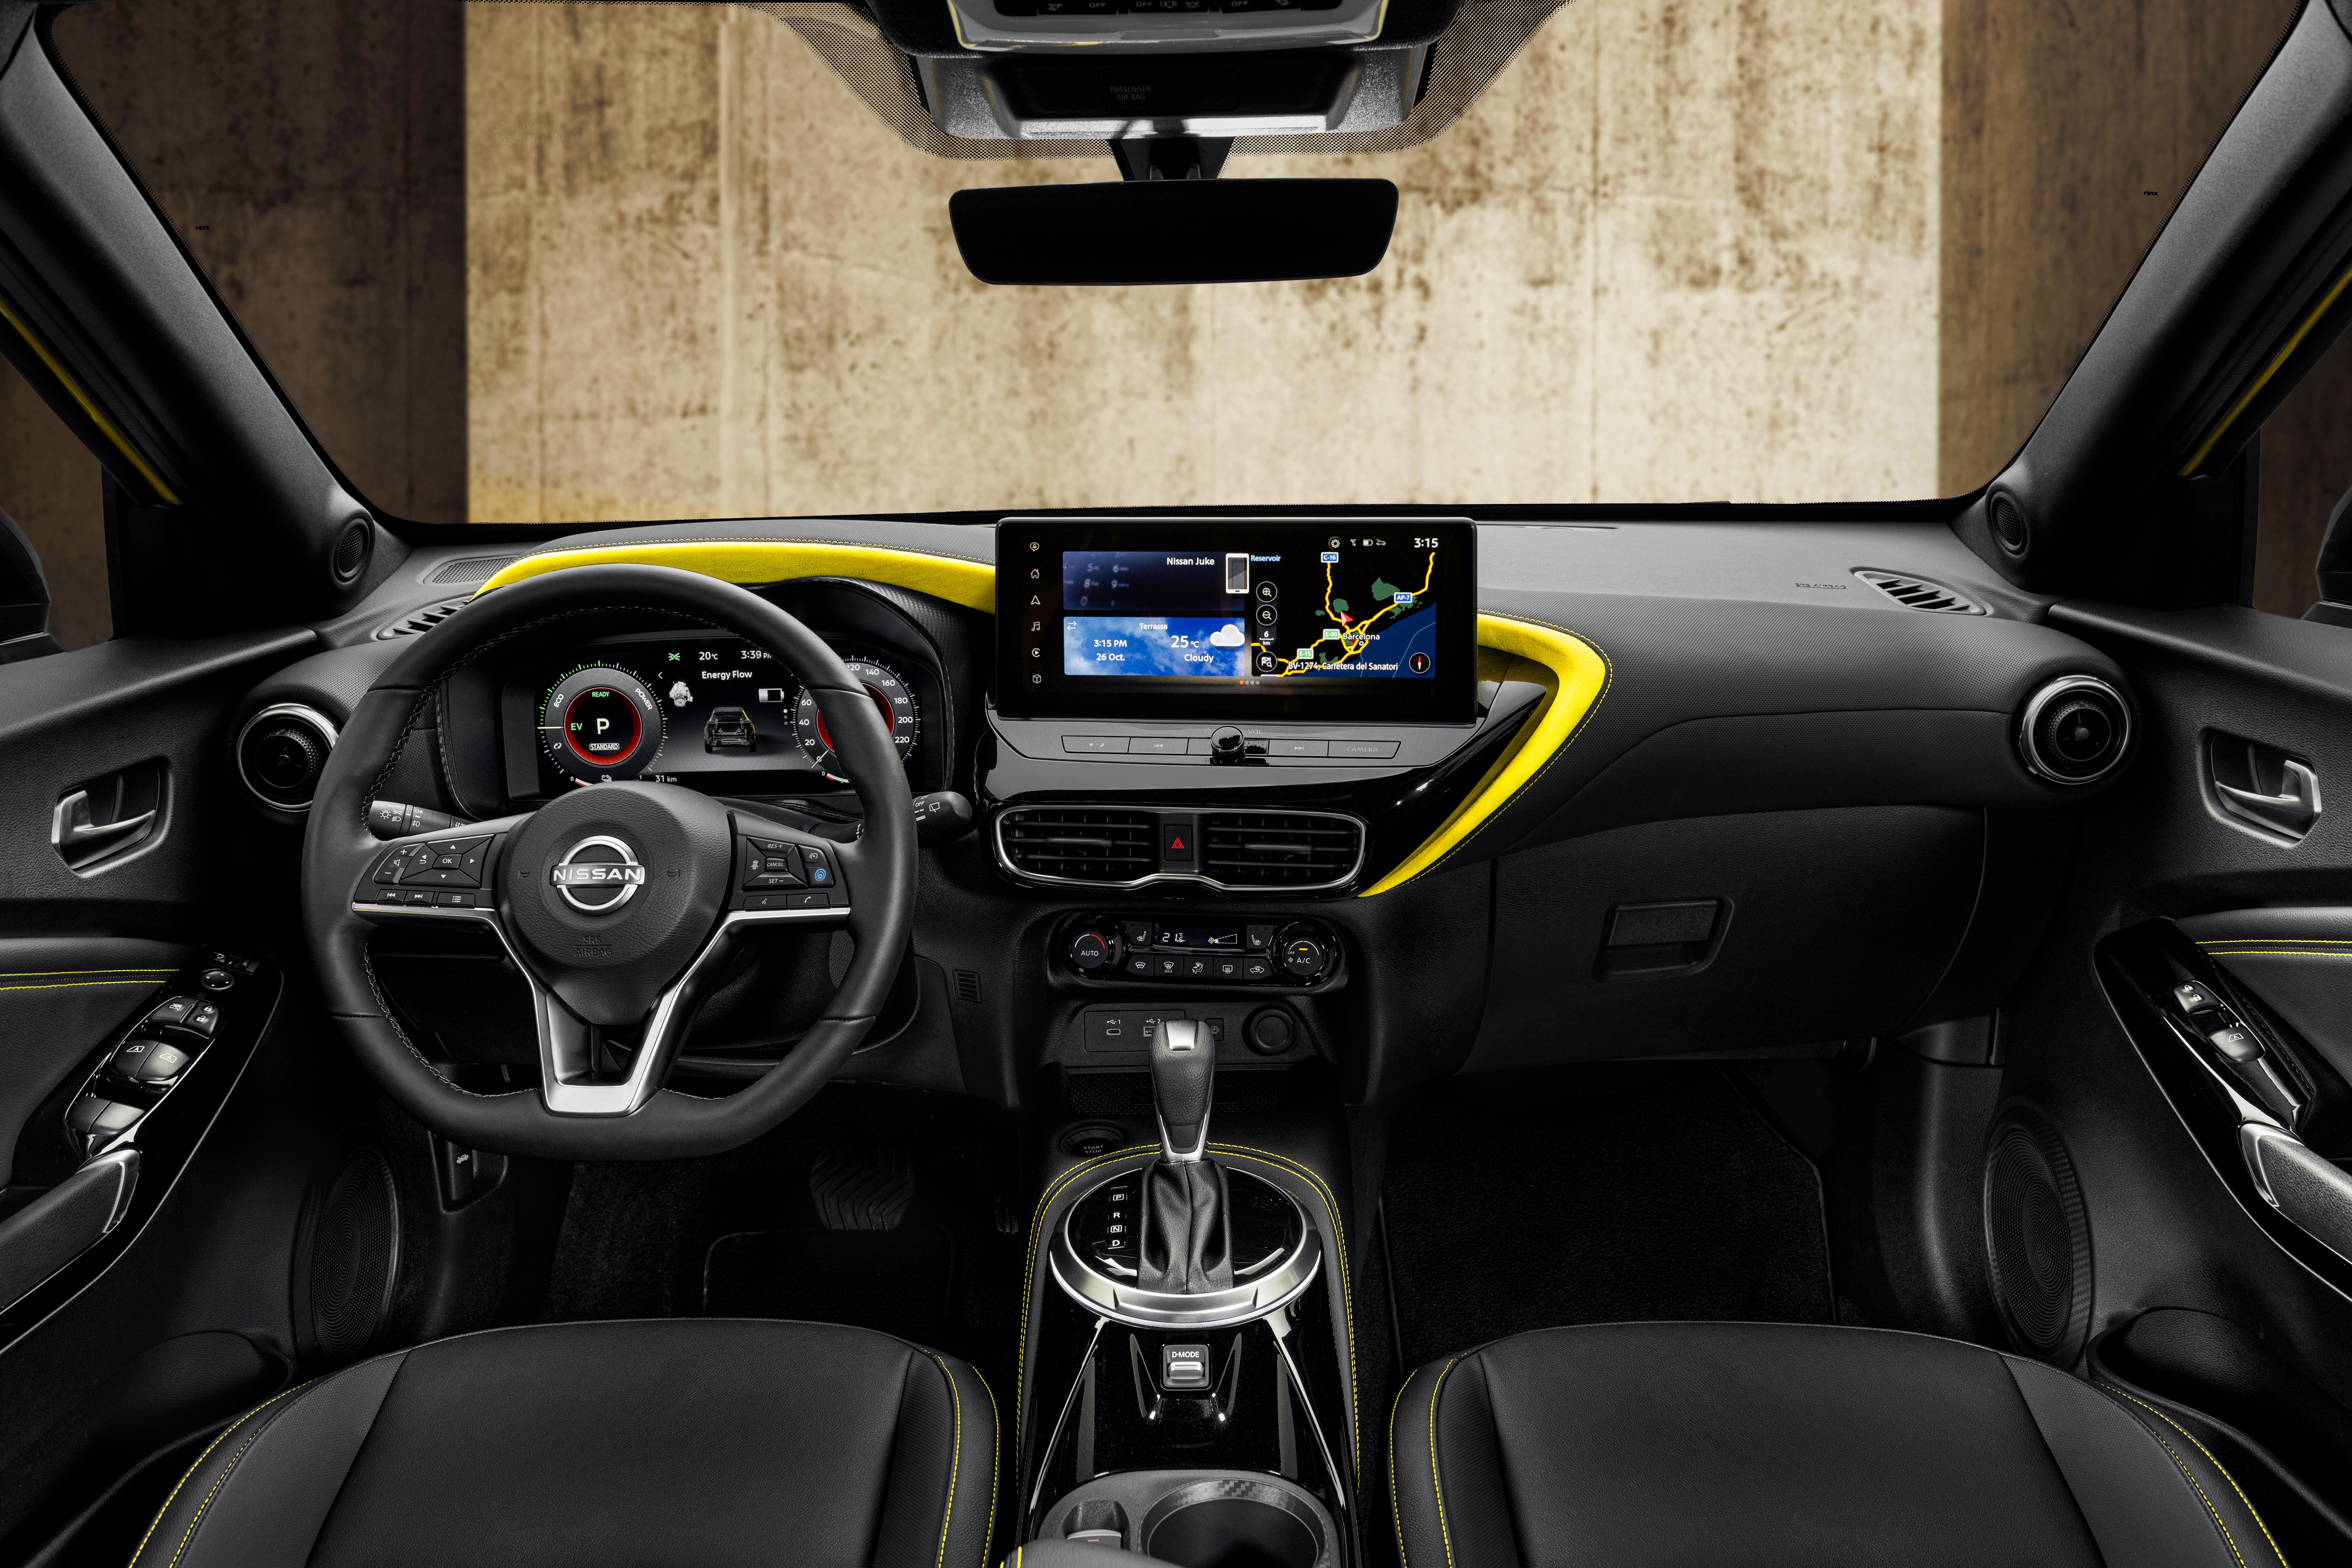 Nissan Juke Interior Layout & Technology